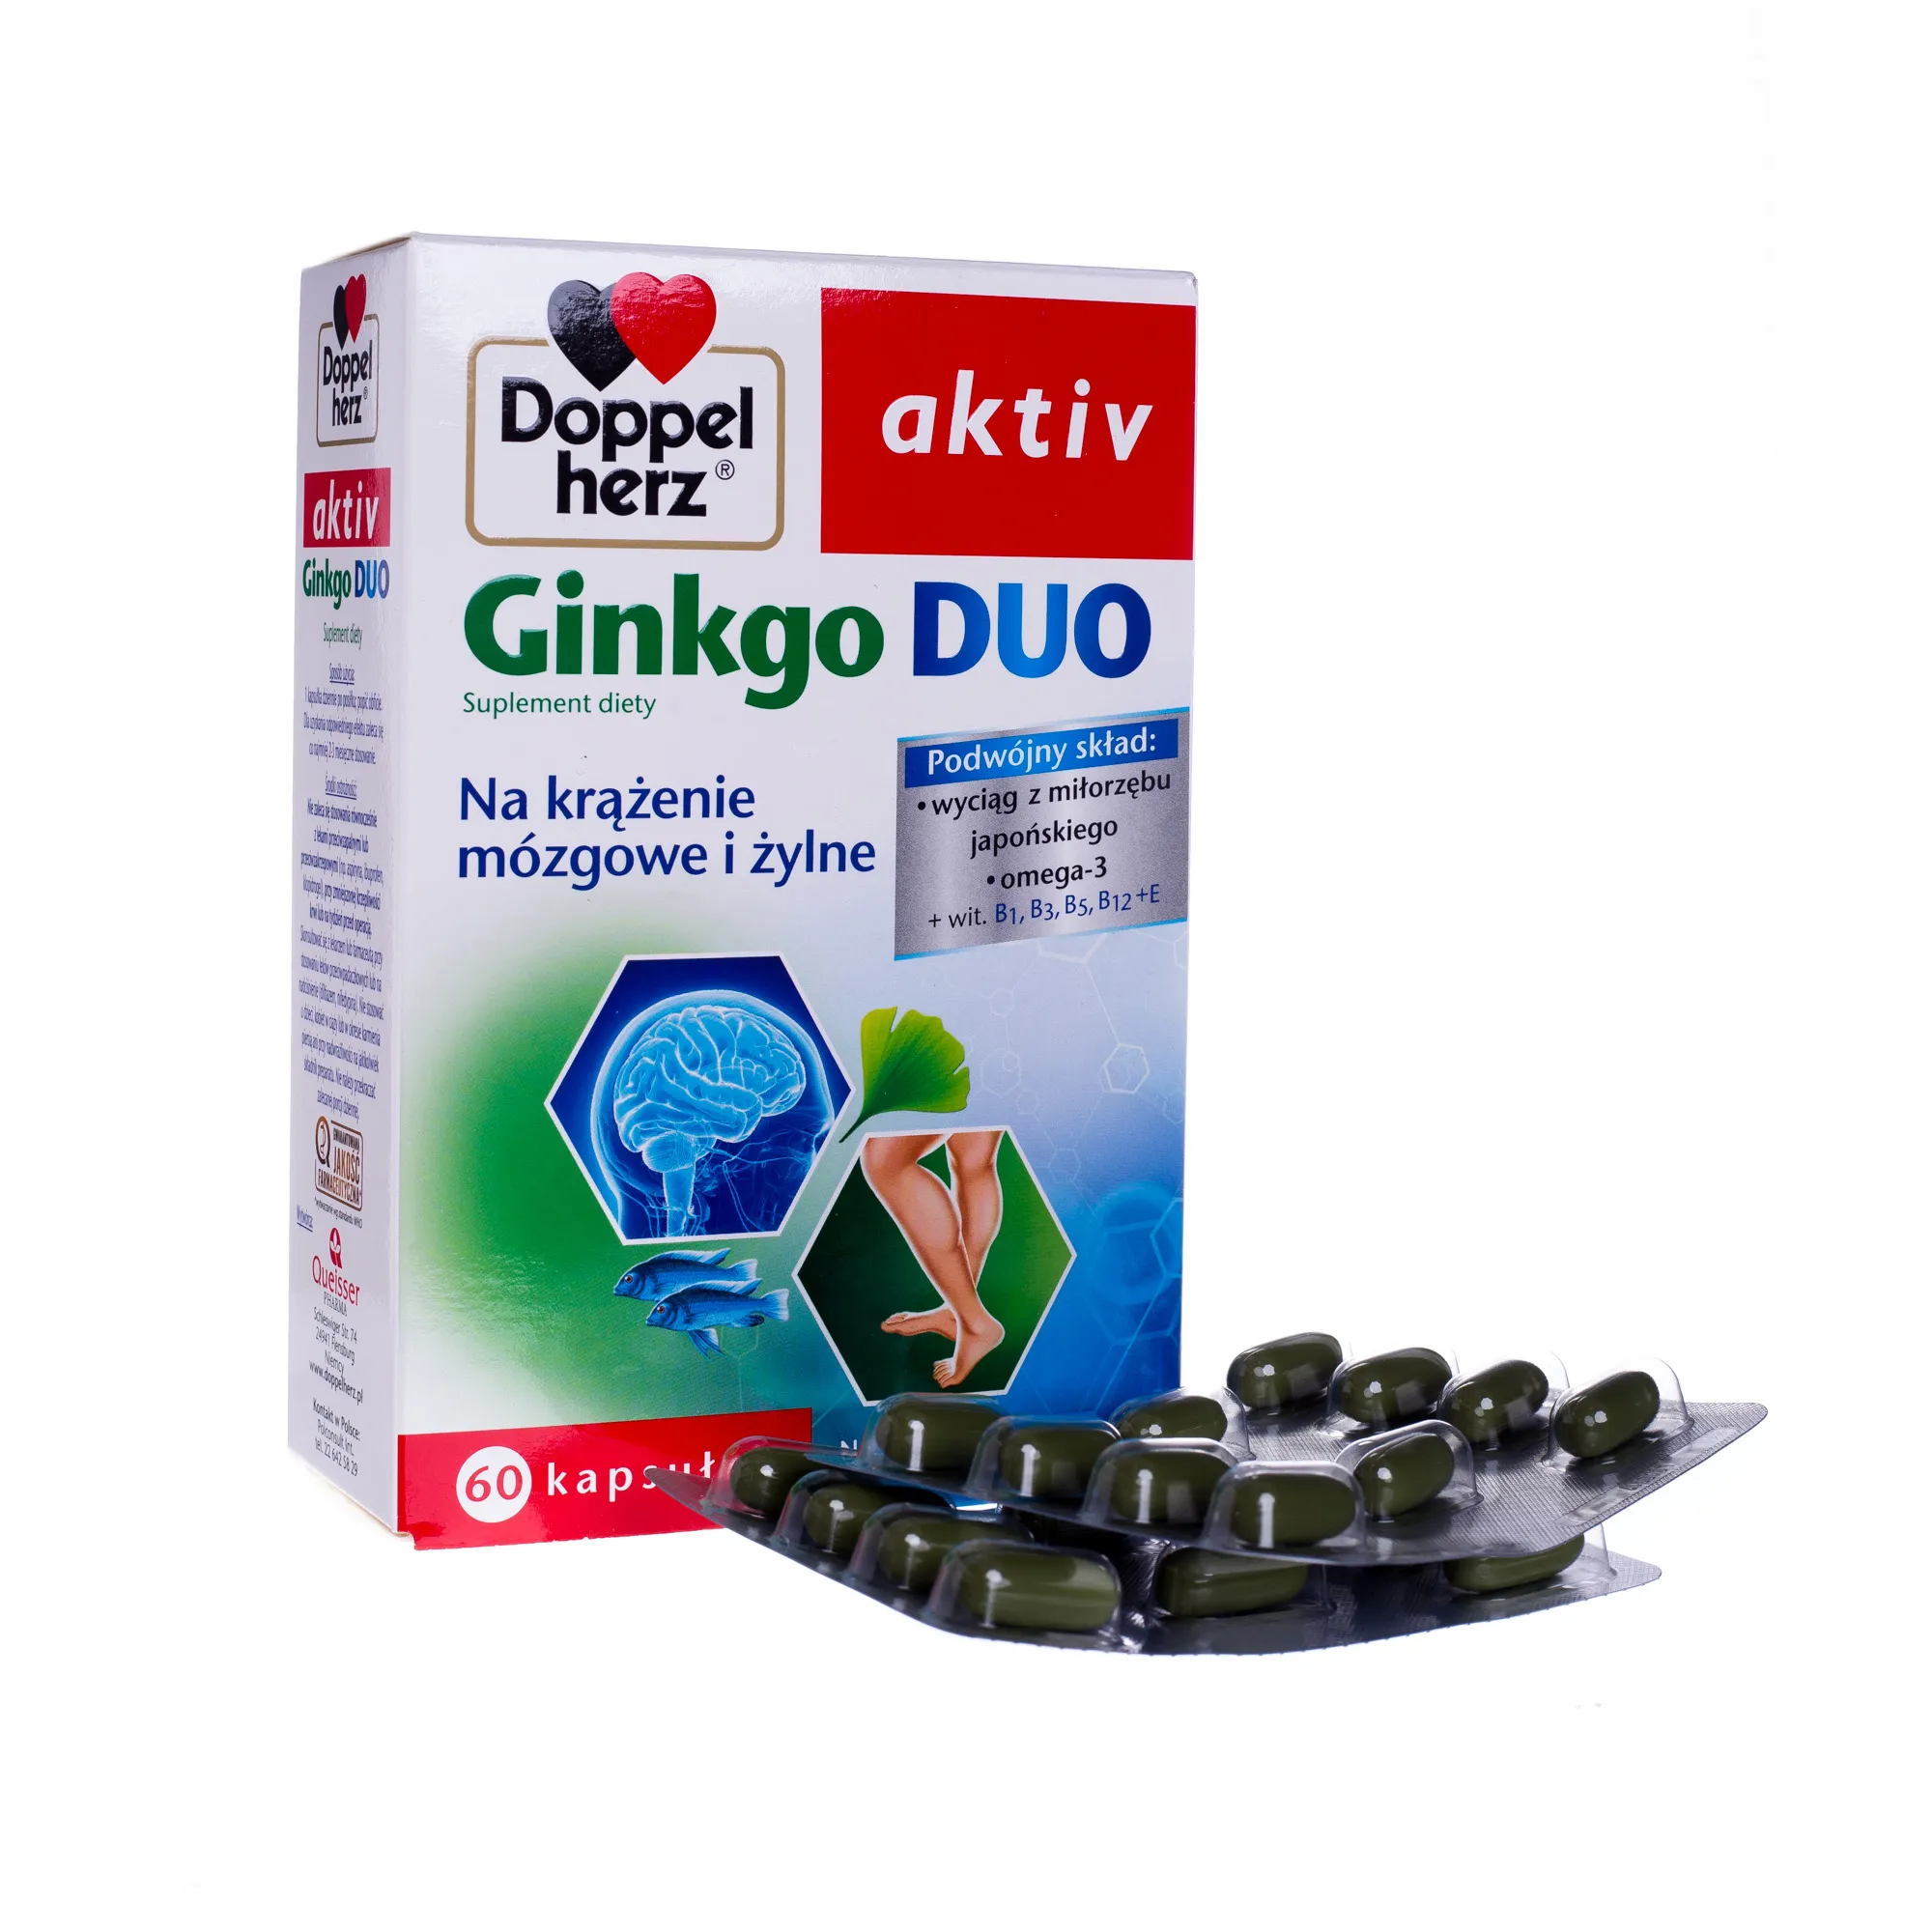 Doppelherz Aktiv, Ginkgo Duo, suplement diety, 60 kapsułek